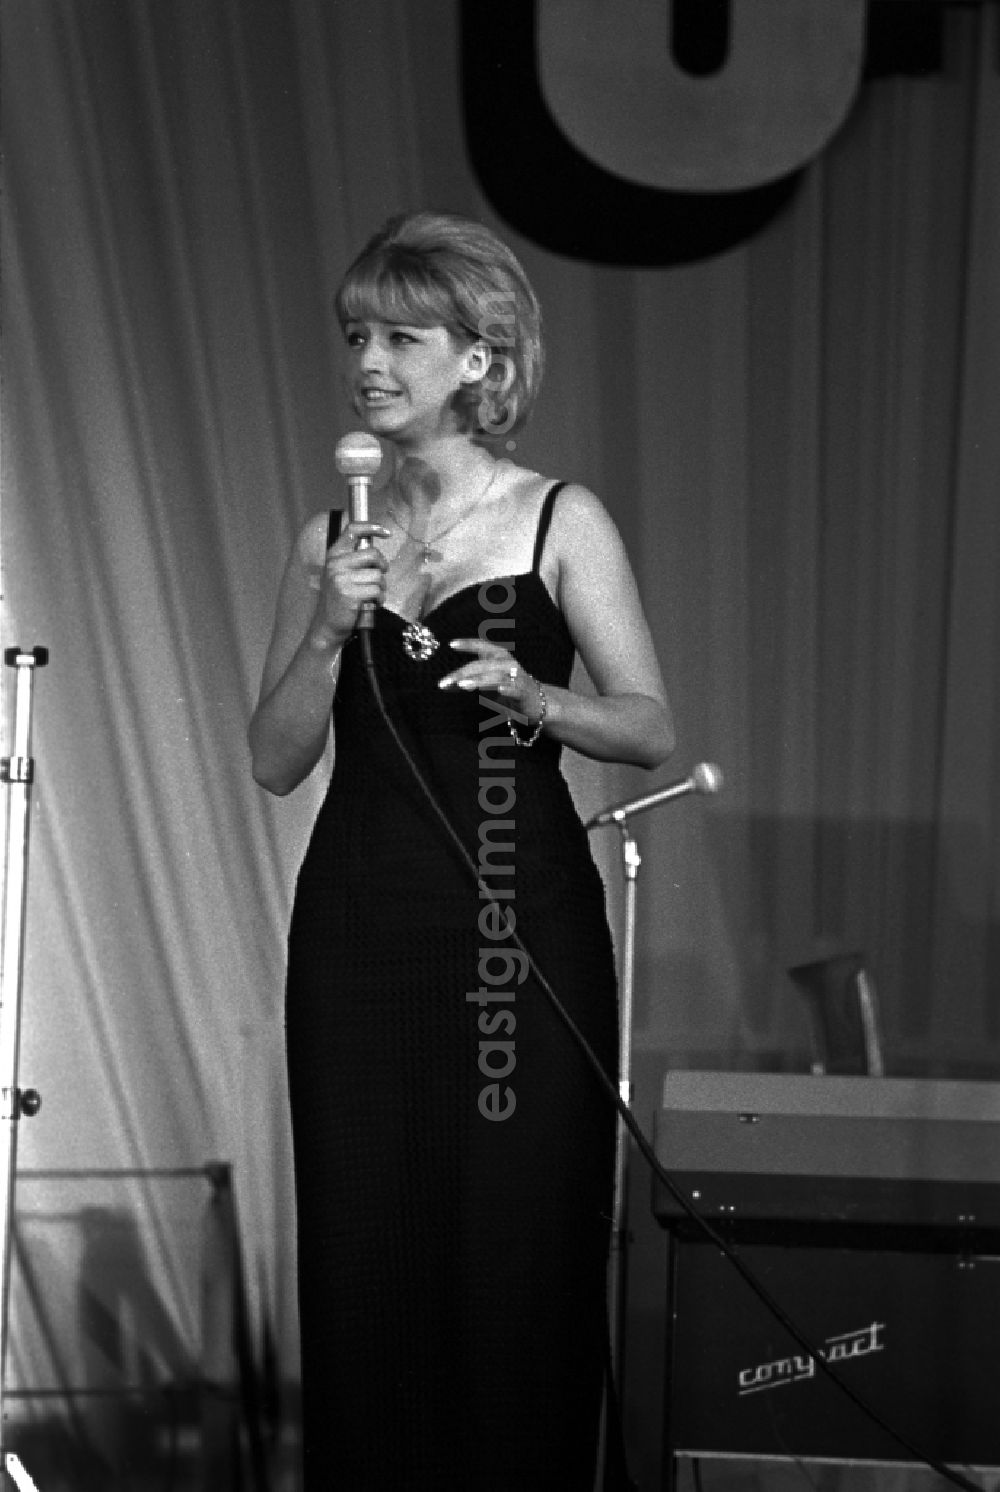 Magdeburg: The swedish pop singer Lill-Babs (Barbro Margareta Svensson) at a show in Magdeburg in Saxony - Anhalt